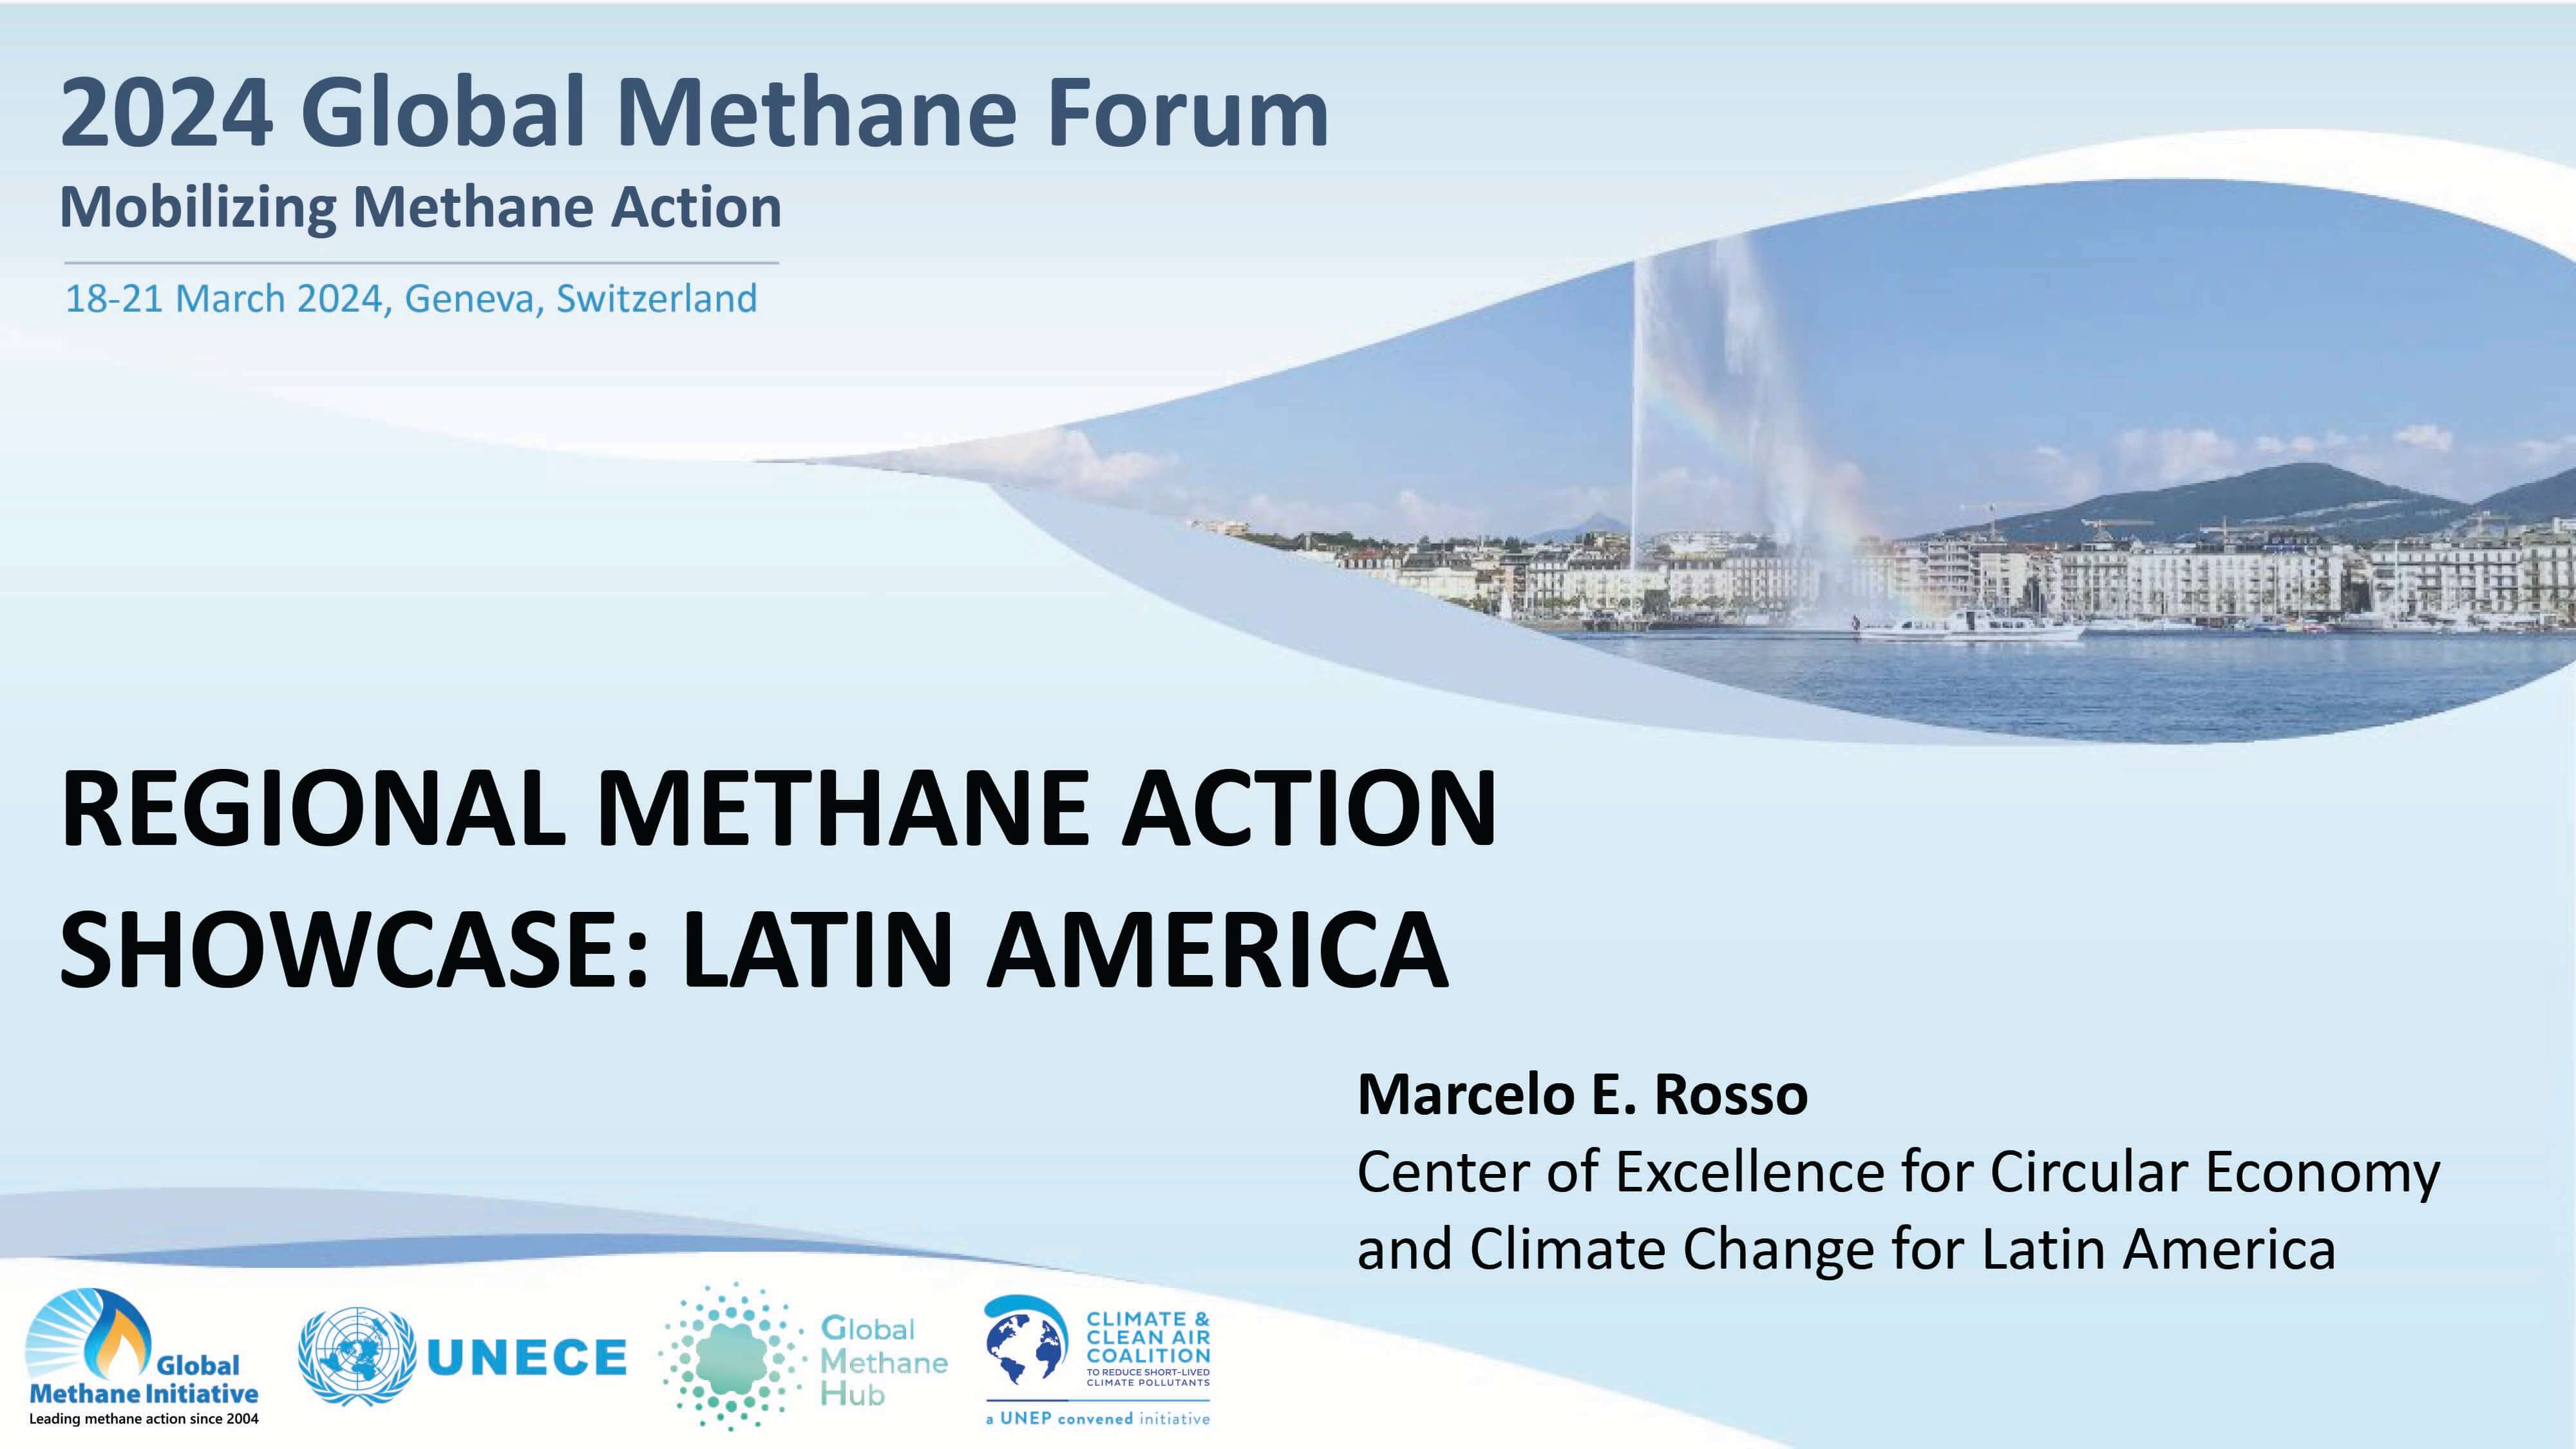 Regional Methane Action Showcase: Latin America